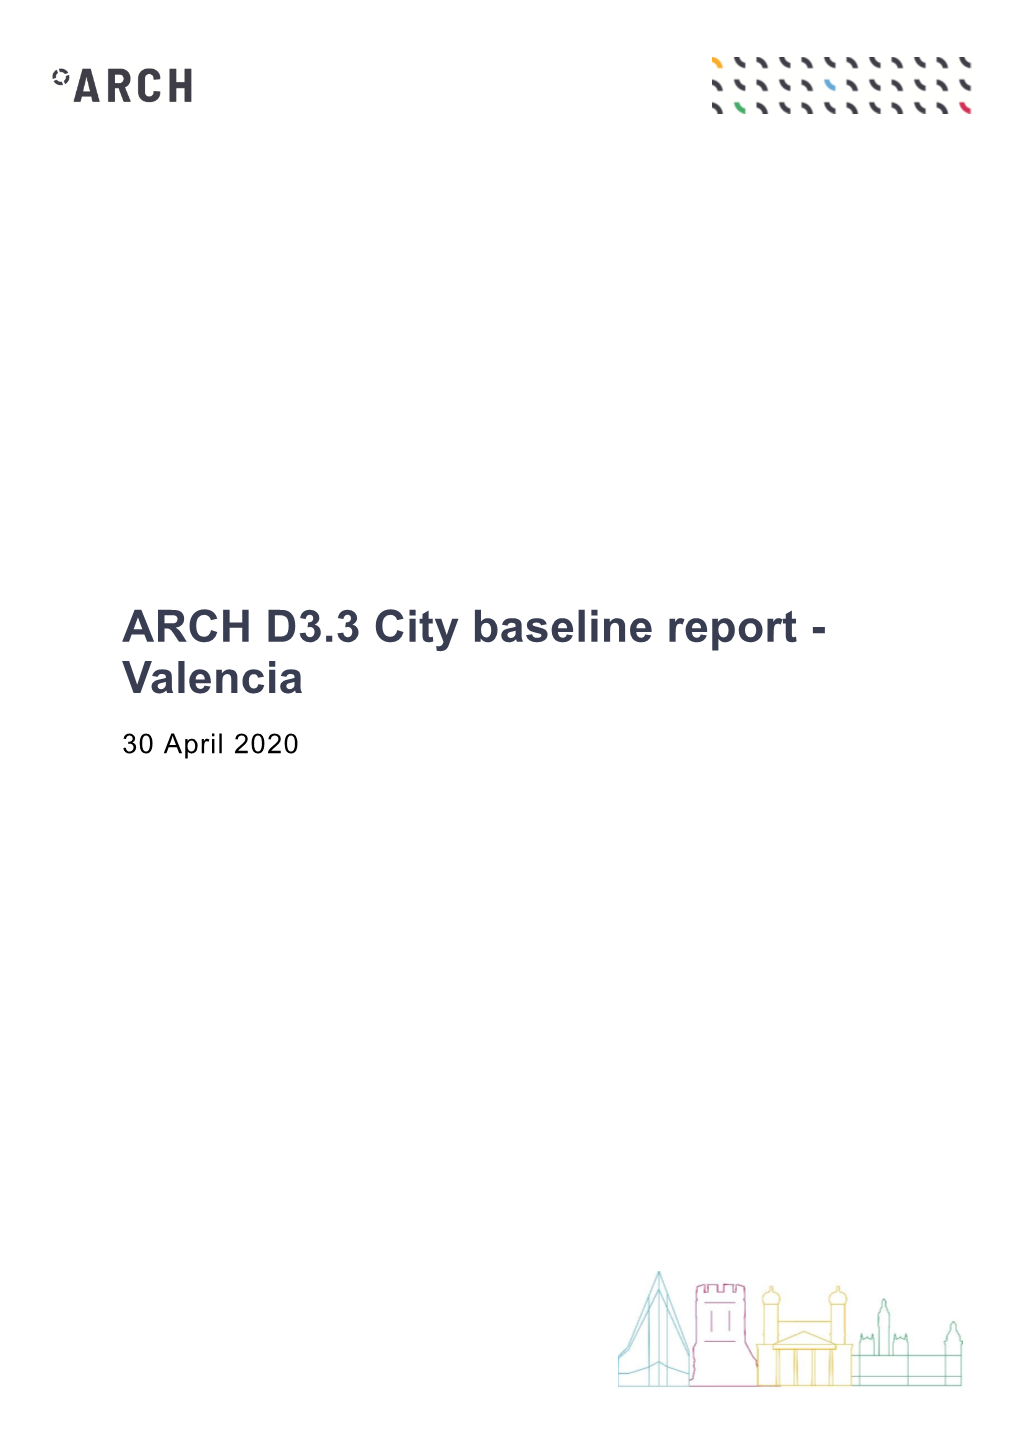 ARCH D3.3 City Baseline Report - Valencia